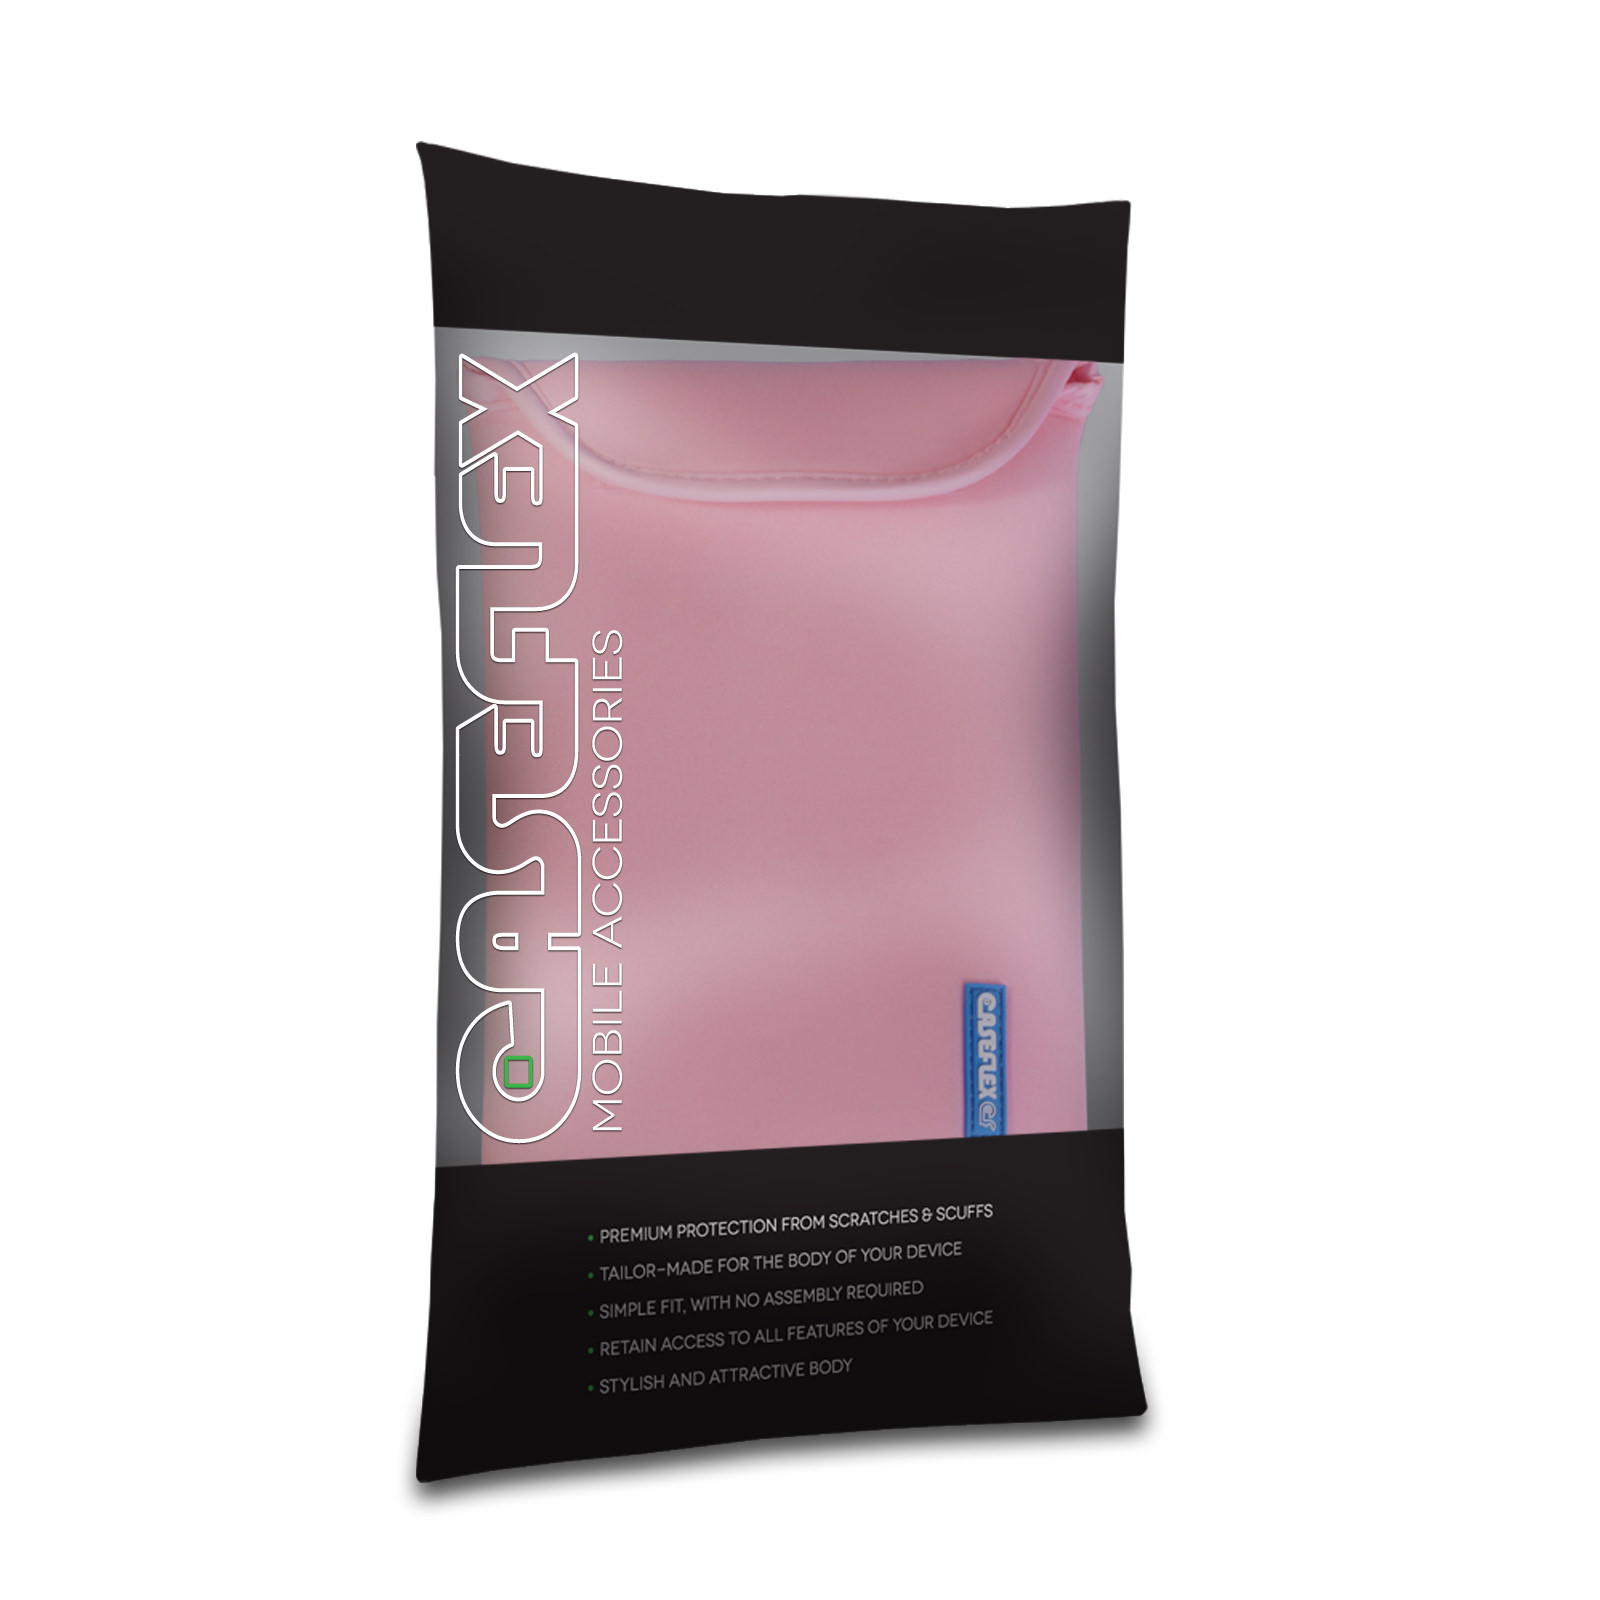 Caseflex 7 Inch Baby Pink Neoprene Tablet Pouch (S) 